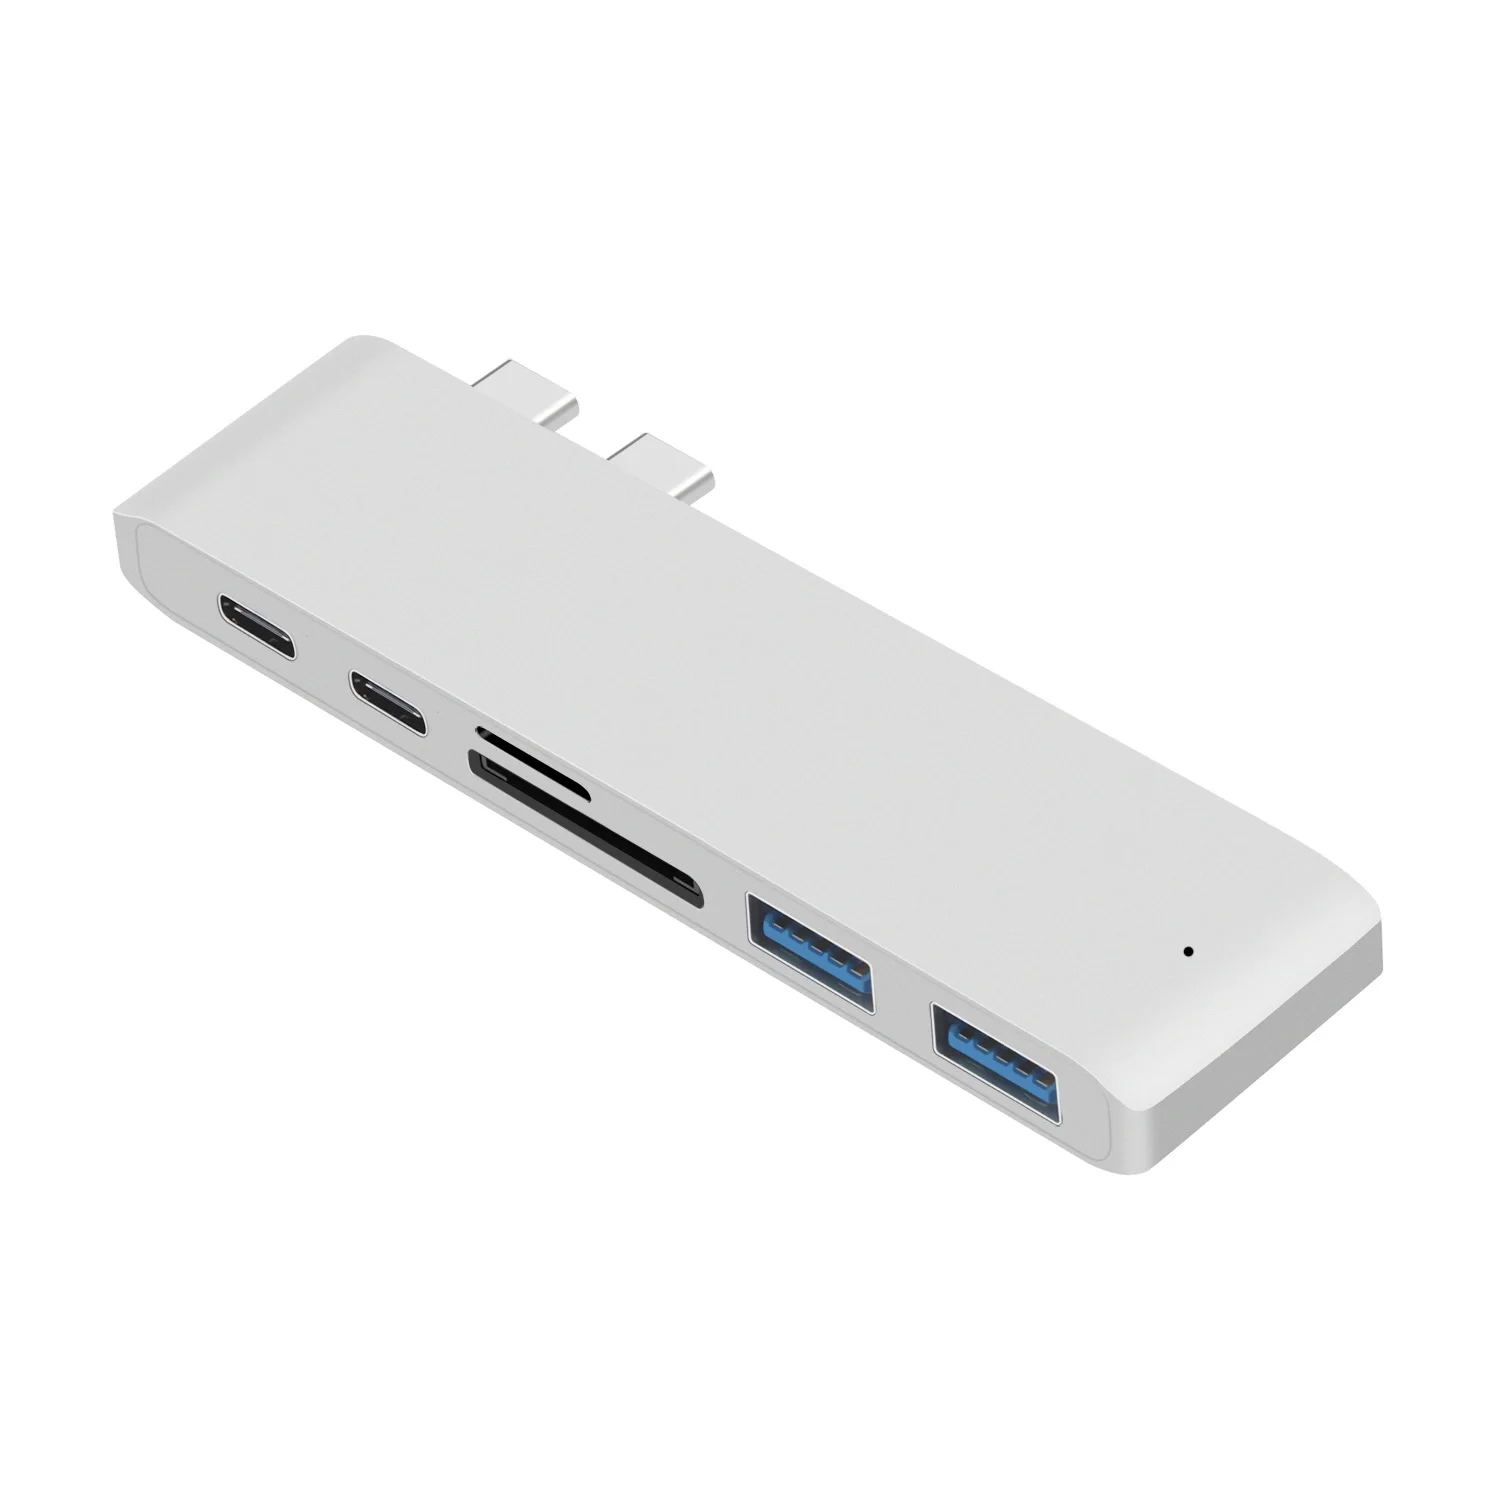 

USB-C Hub 6 in 1 Type C Hub to USB 3.0 Hub Splitter Adapter Power Port SD/TF Card Reader OTG Combo Converter for Macbook, Siliver/grey